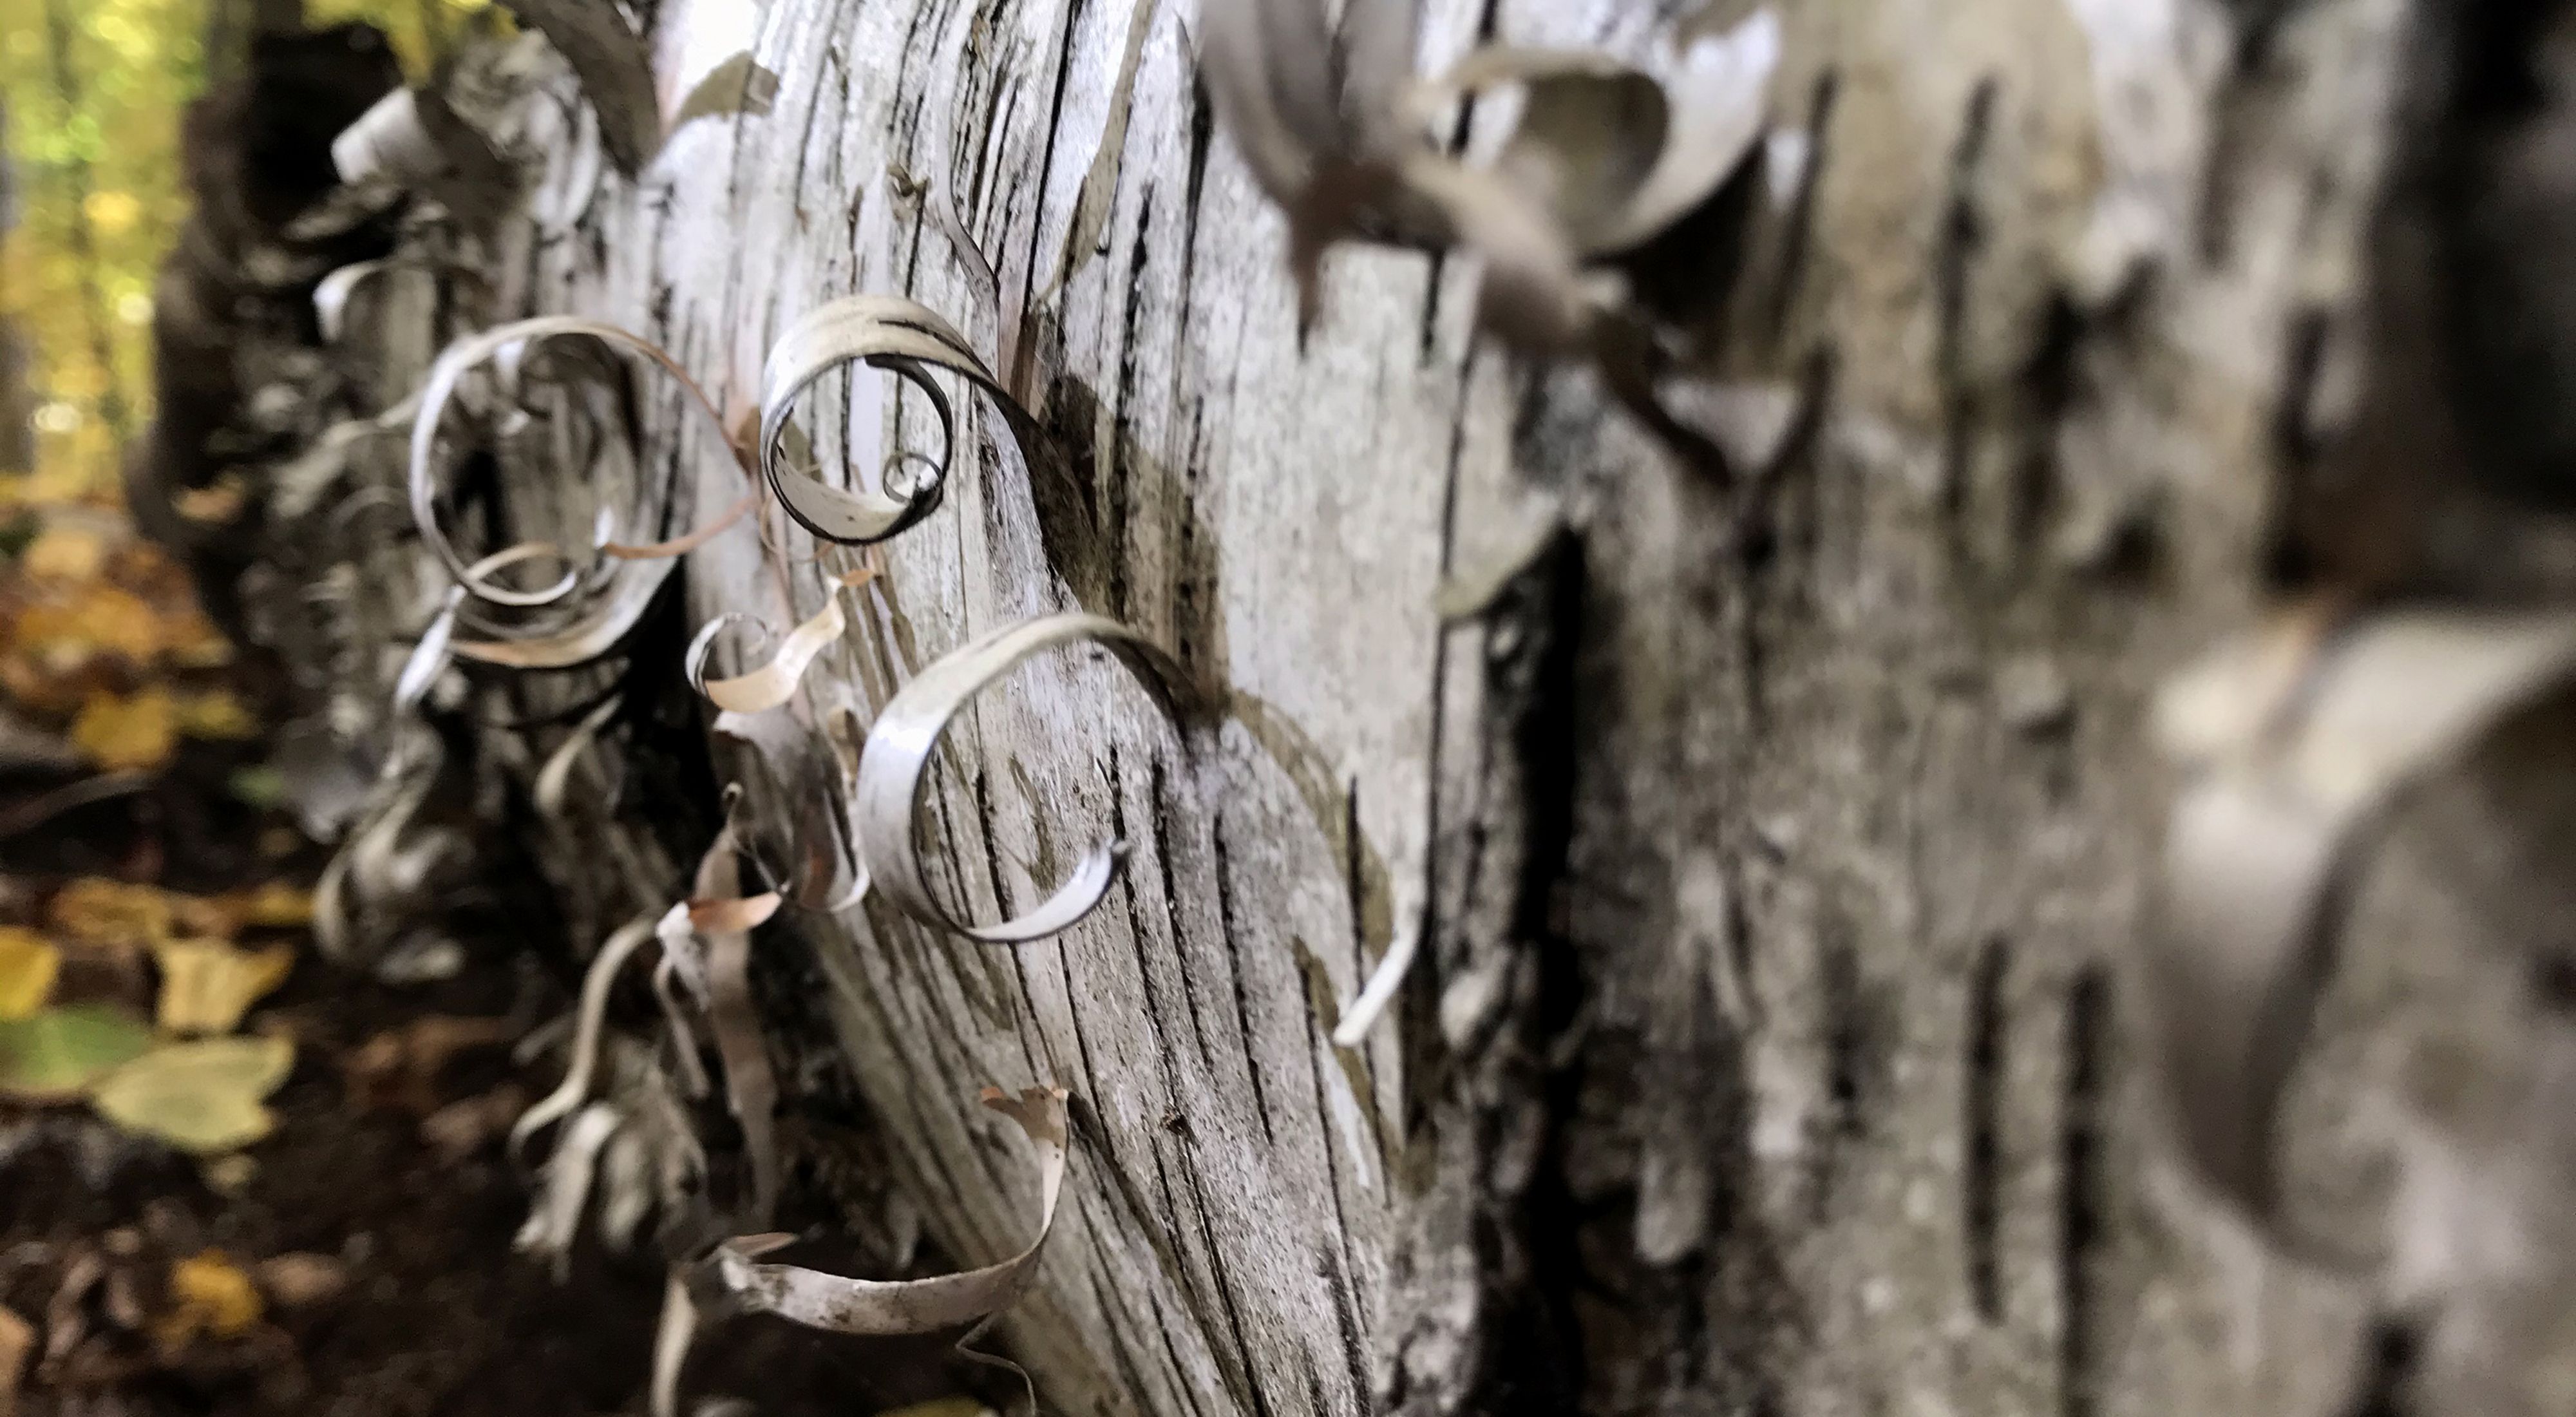 Close up of seamless birch bark texture on Craiyon